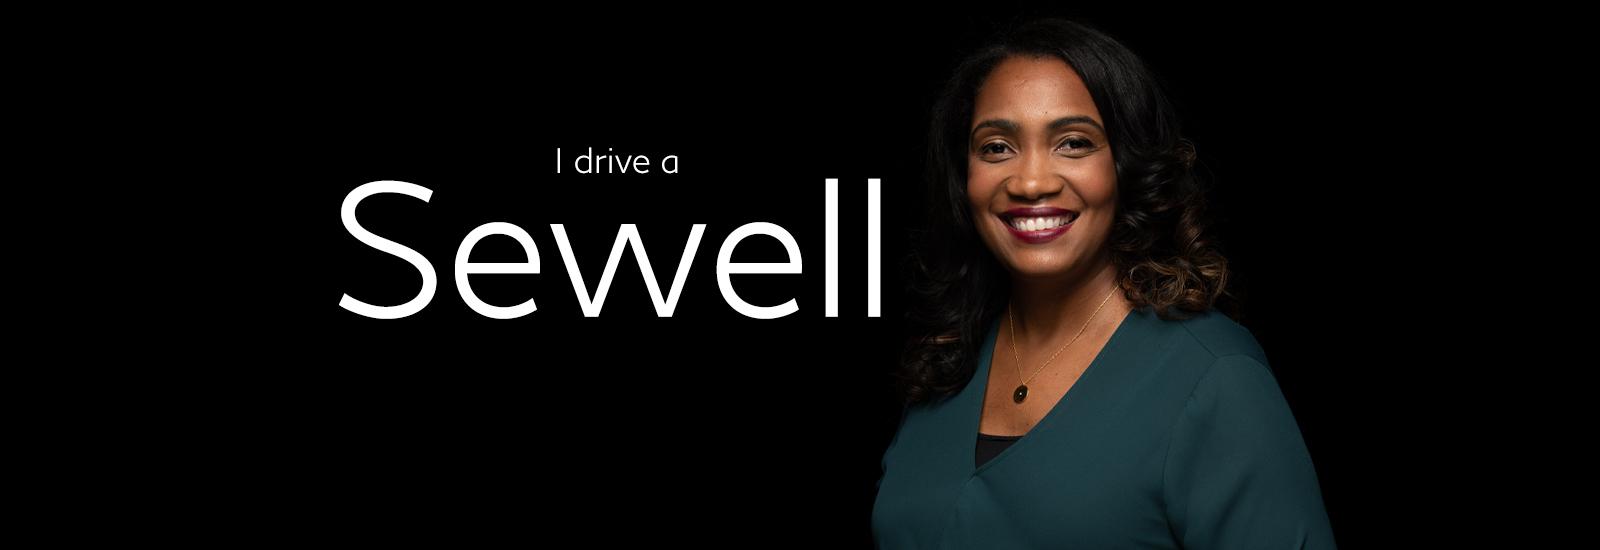 I drive a Sewell